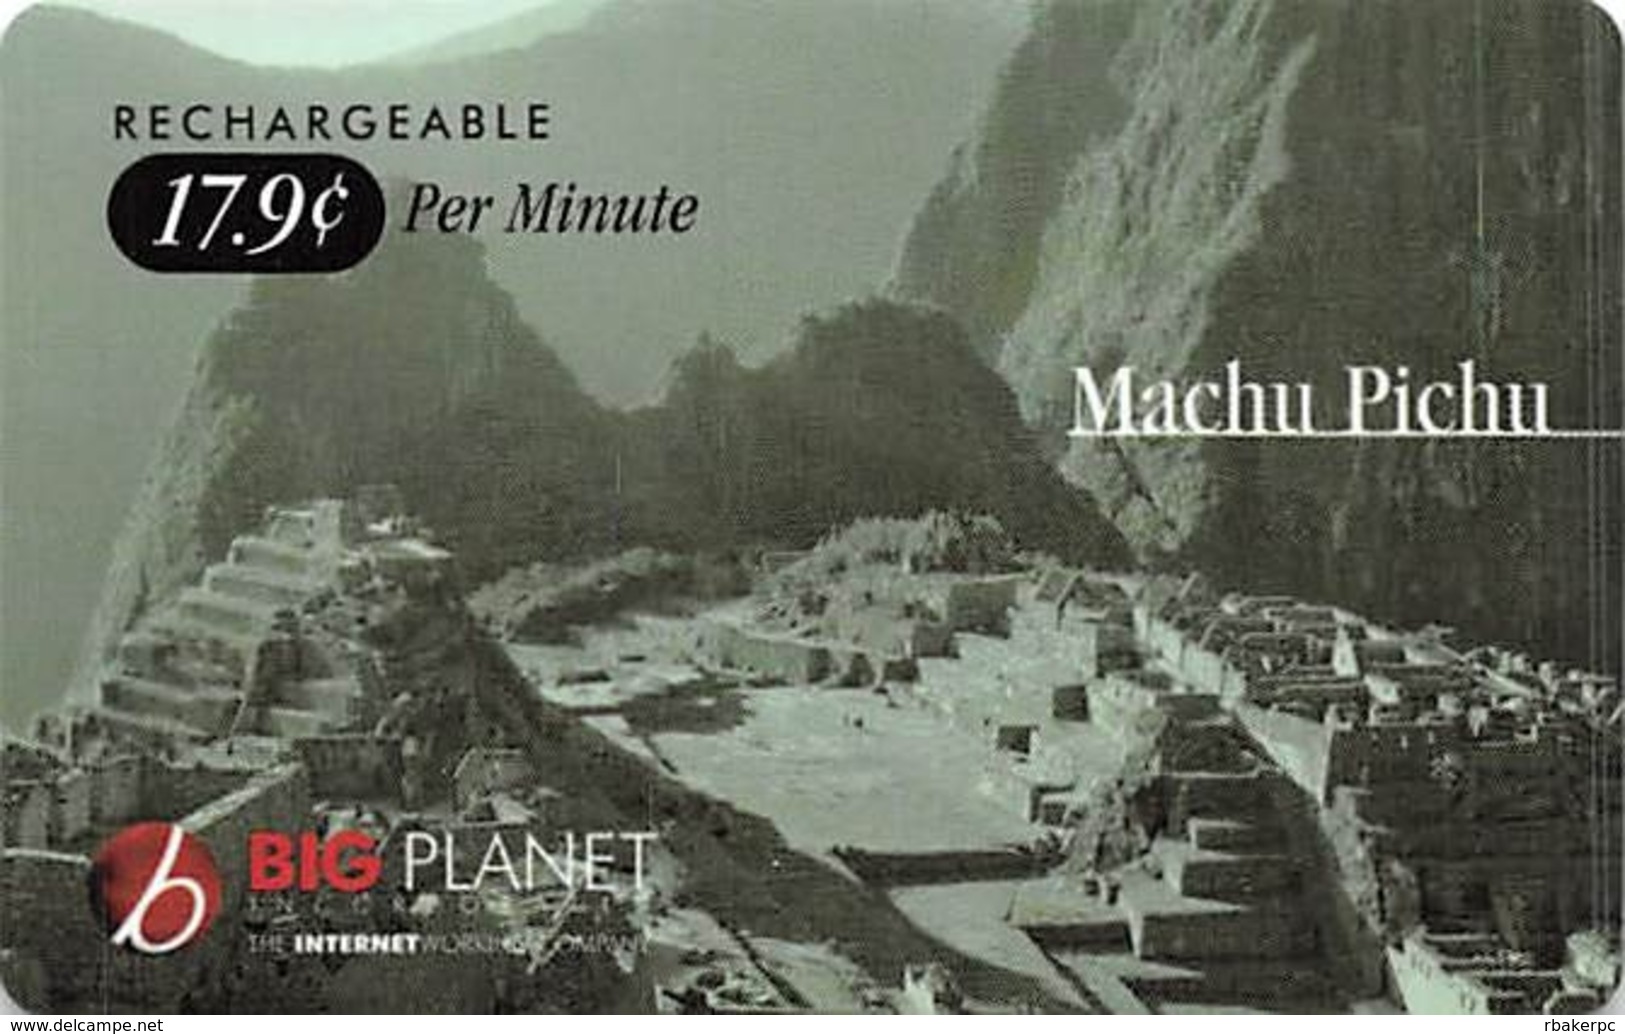 Big Planet Rechargeable Phone Card - Machu Pichu - Landscapes